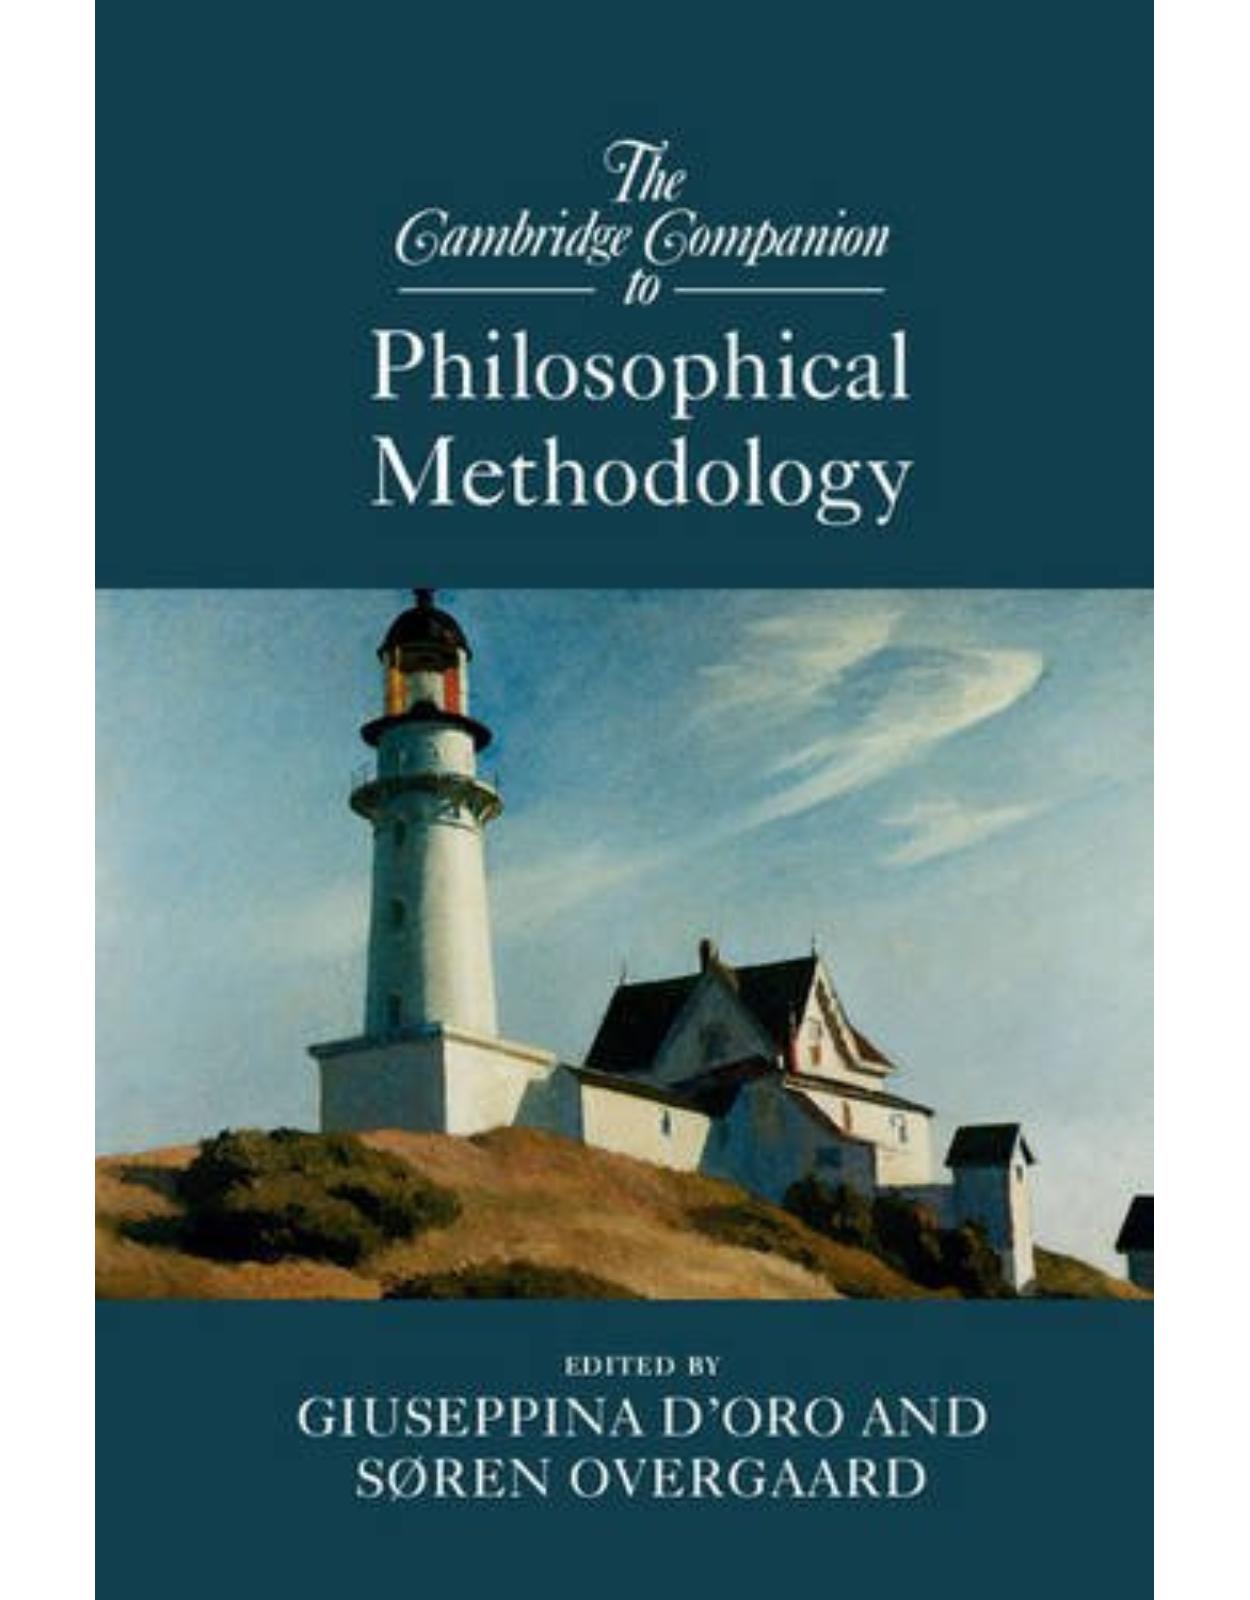 The Cambridge Companion to Philosophical Methodology (Cambridge Companions to Philosophy)